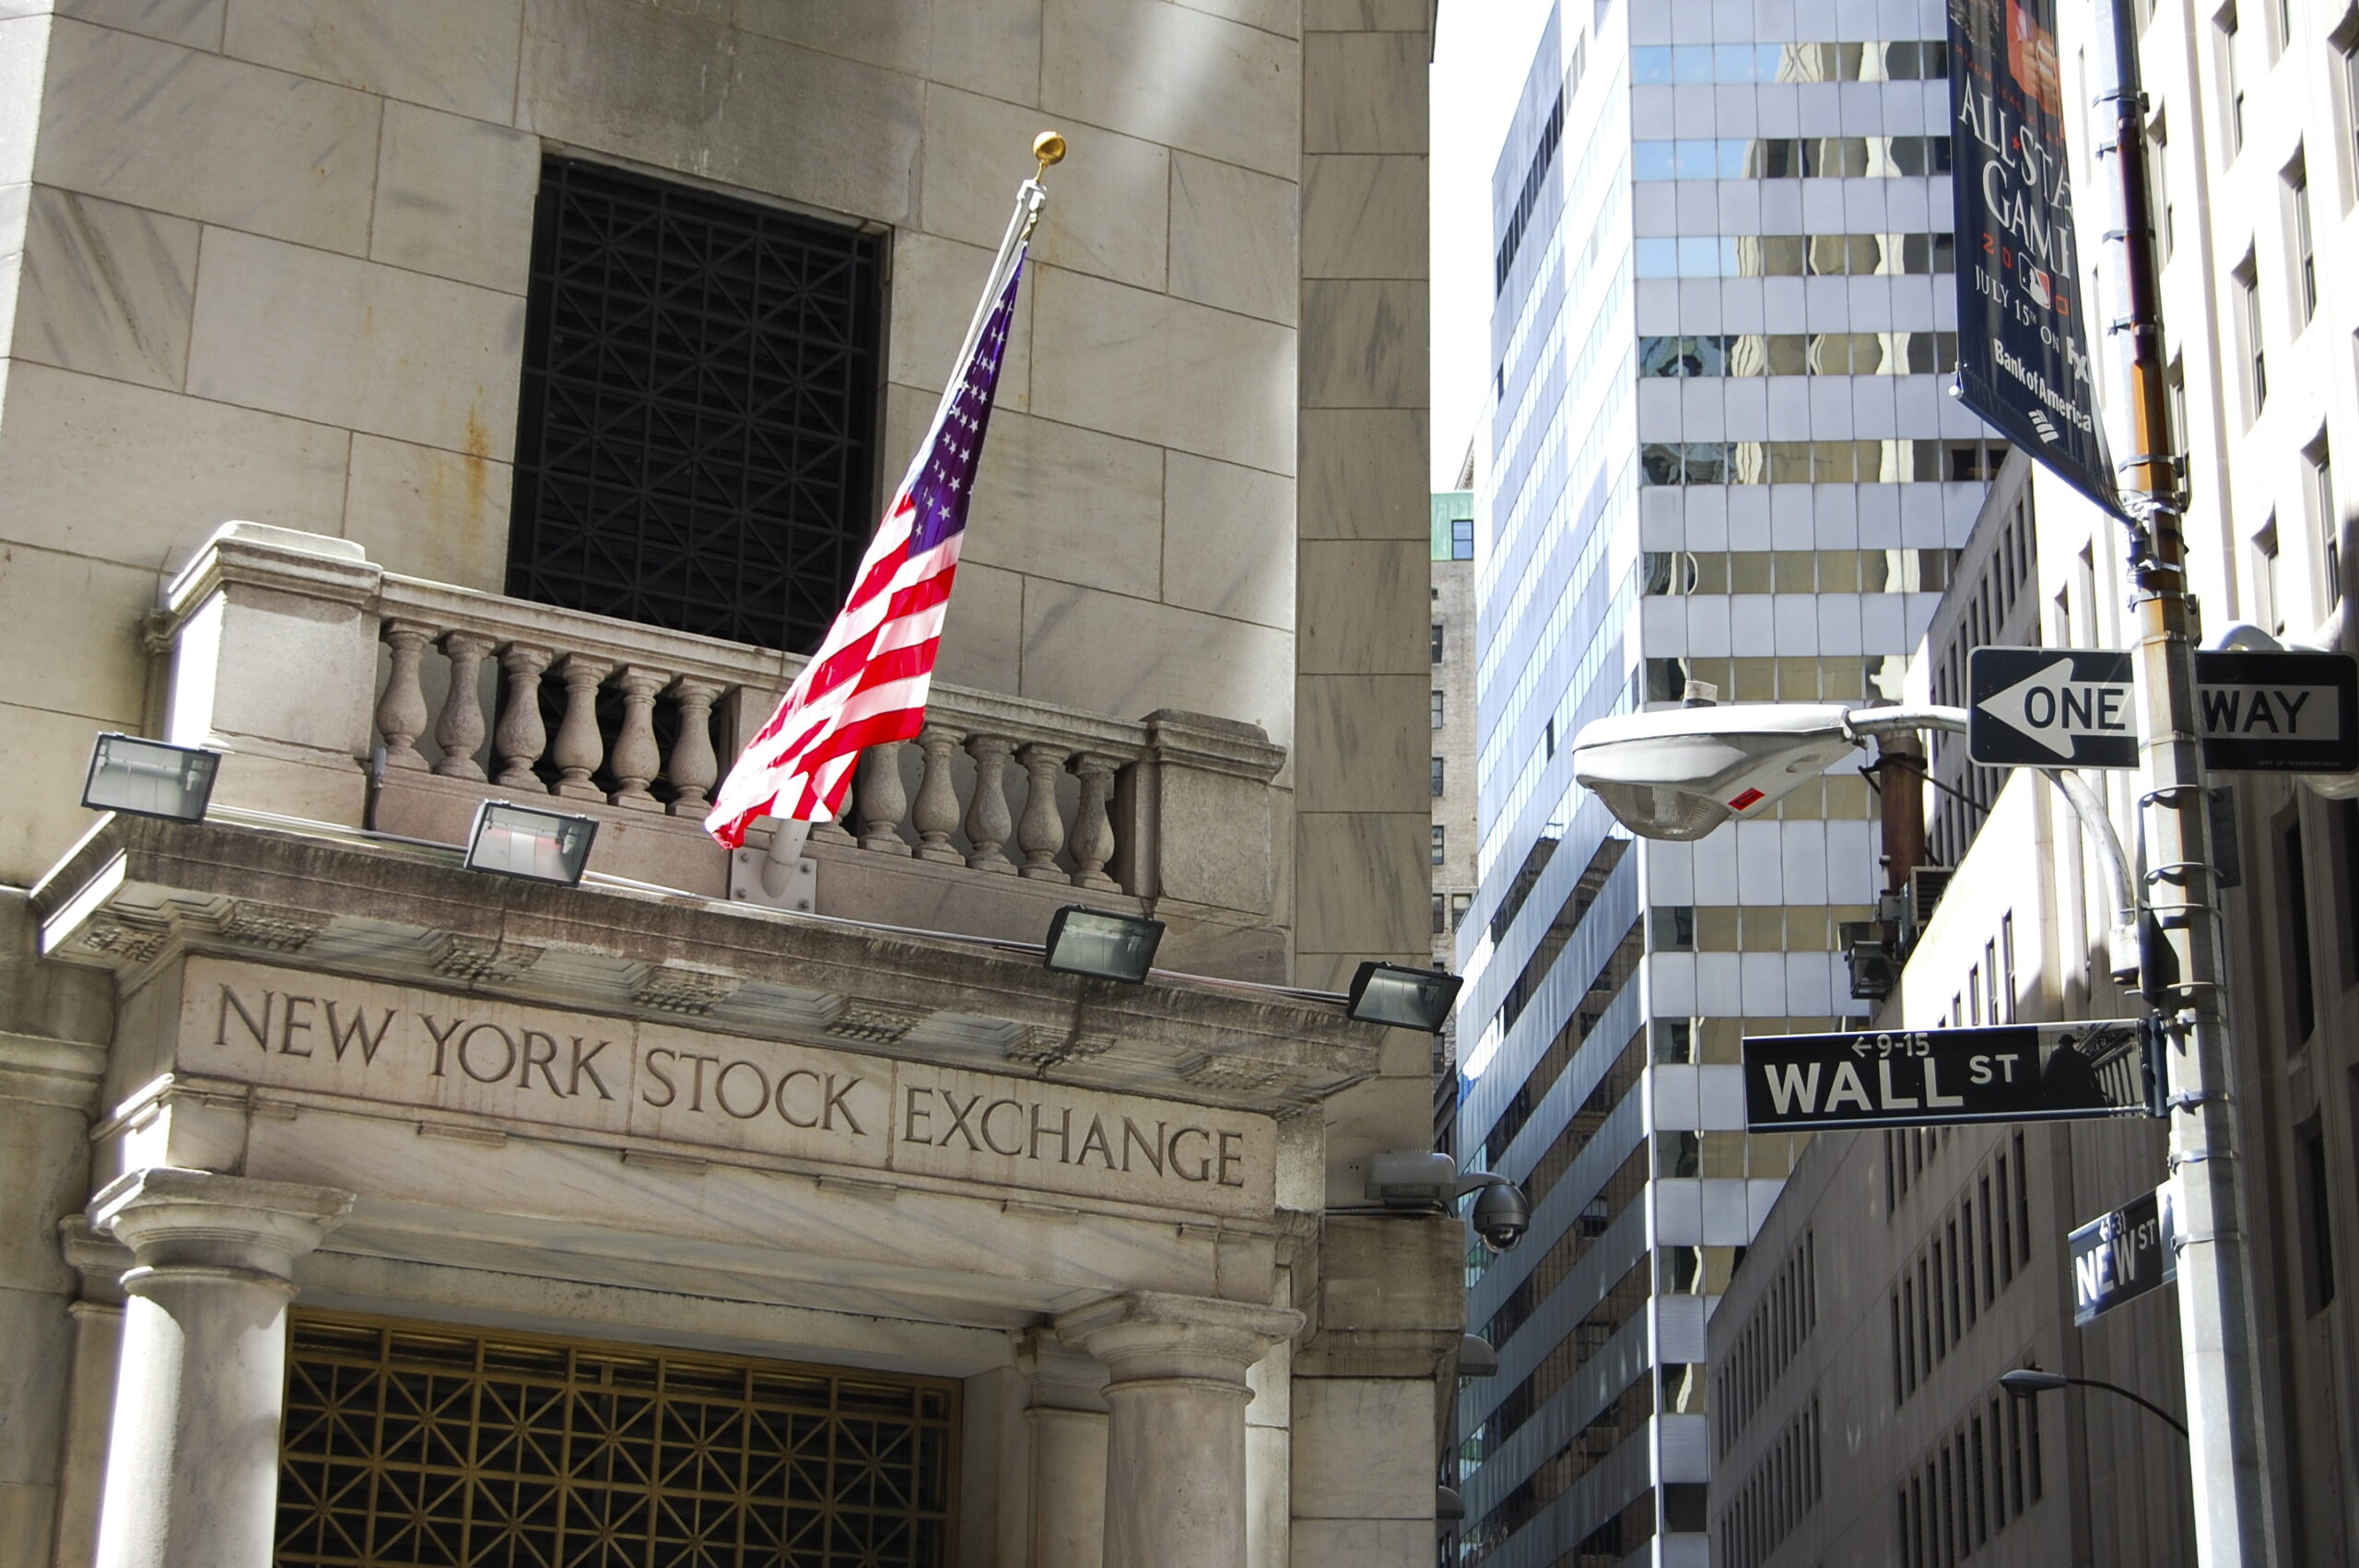 WALL STREET

NEW YORK STOCK EXCHANGE

NYSE

BORSA DI NEW YORK

BIG BOARD